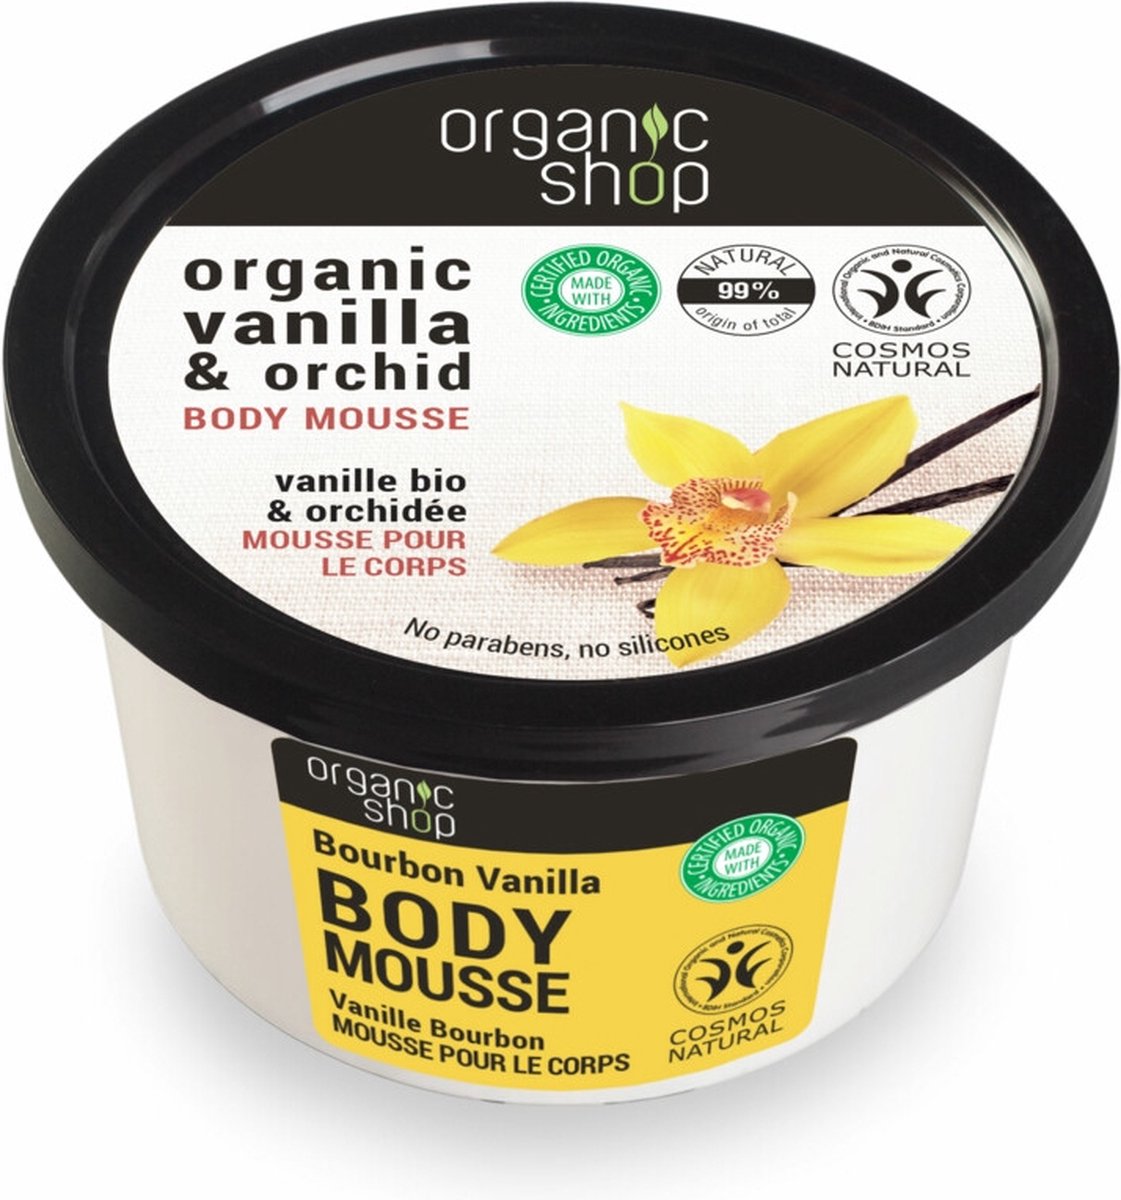 Organic Shop - Organic Vanilla & Orchid Body Mousse Mus Burbońska Wanilia I Orchidea - 250ML